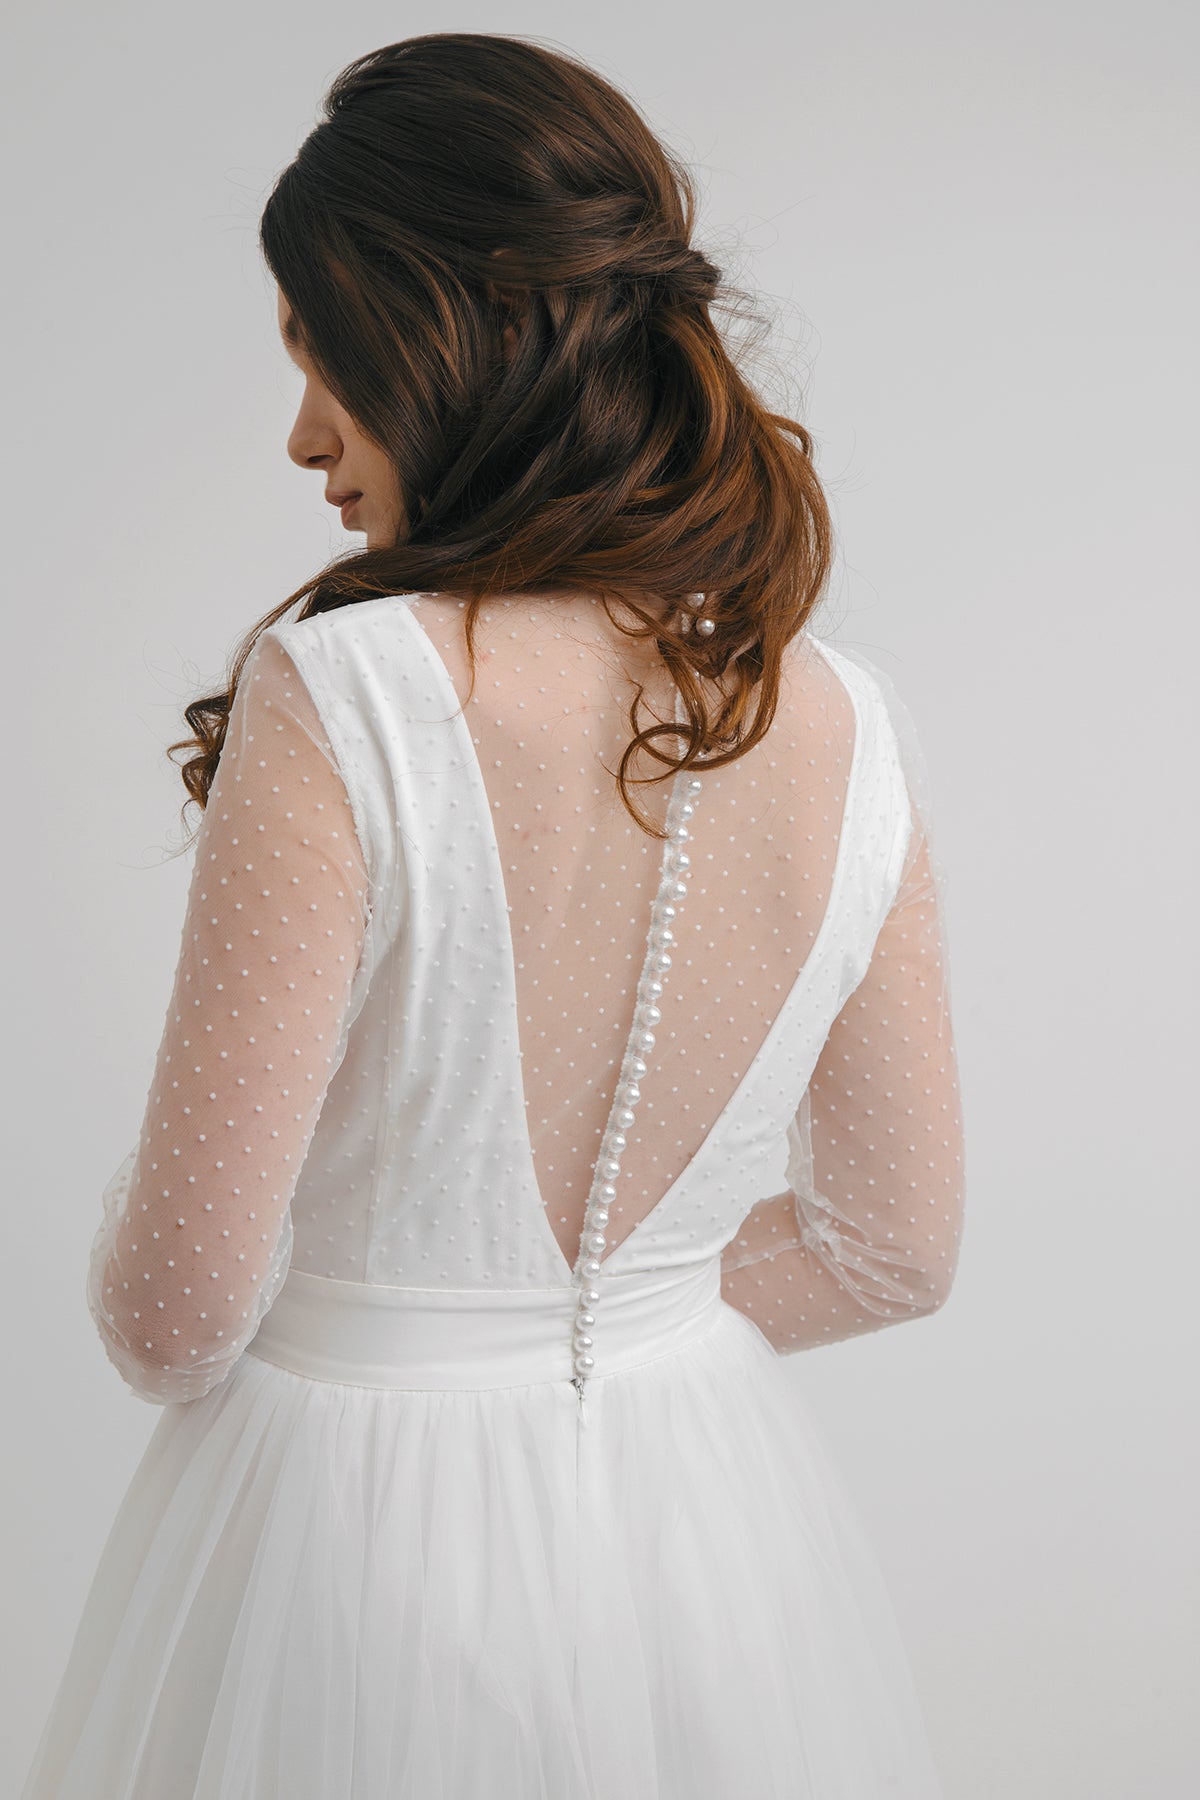 Tulle wedding dress • simple wedding dress • open back • boho wedding dress • minimalist wedding dress • polka dot upper elegant gown